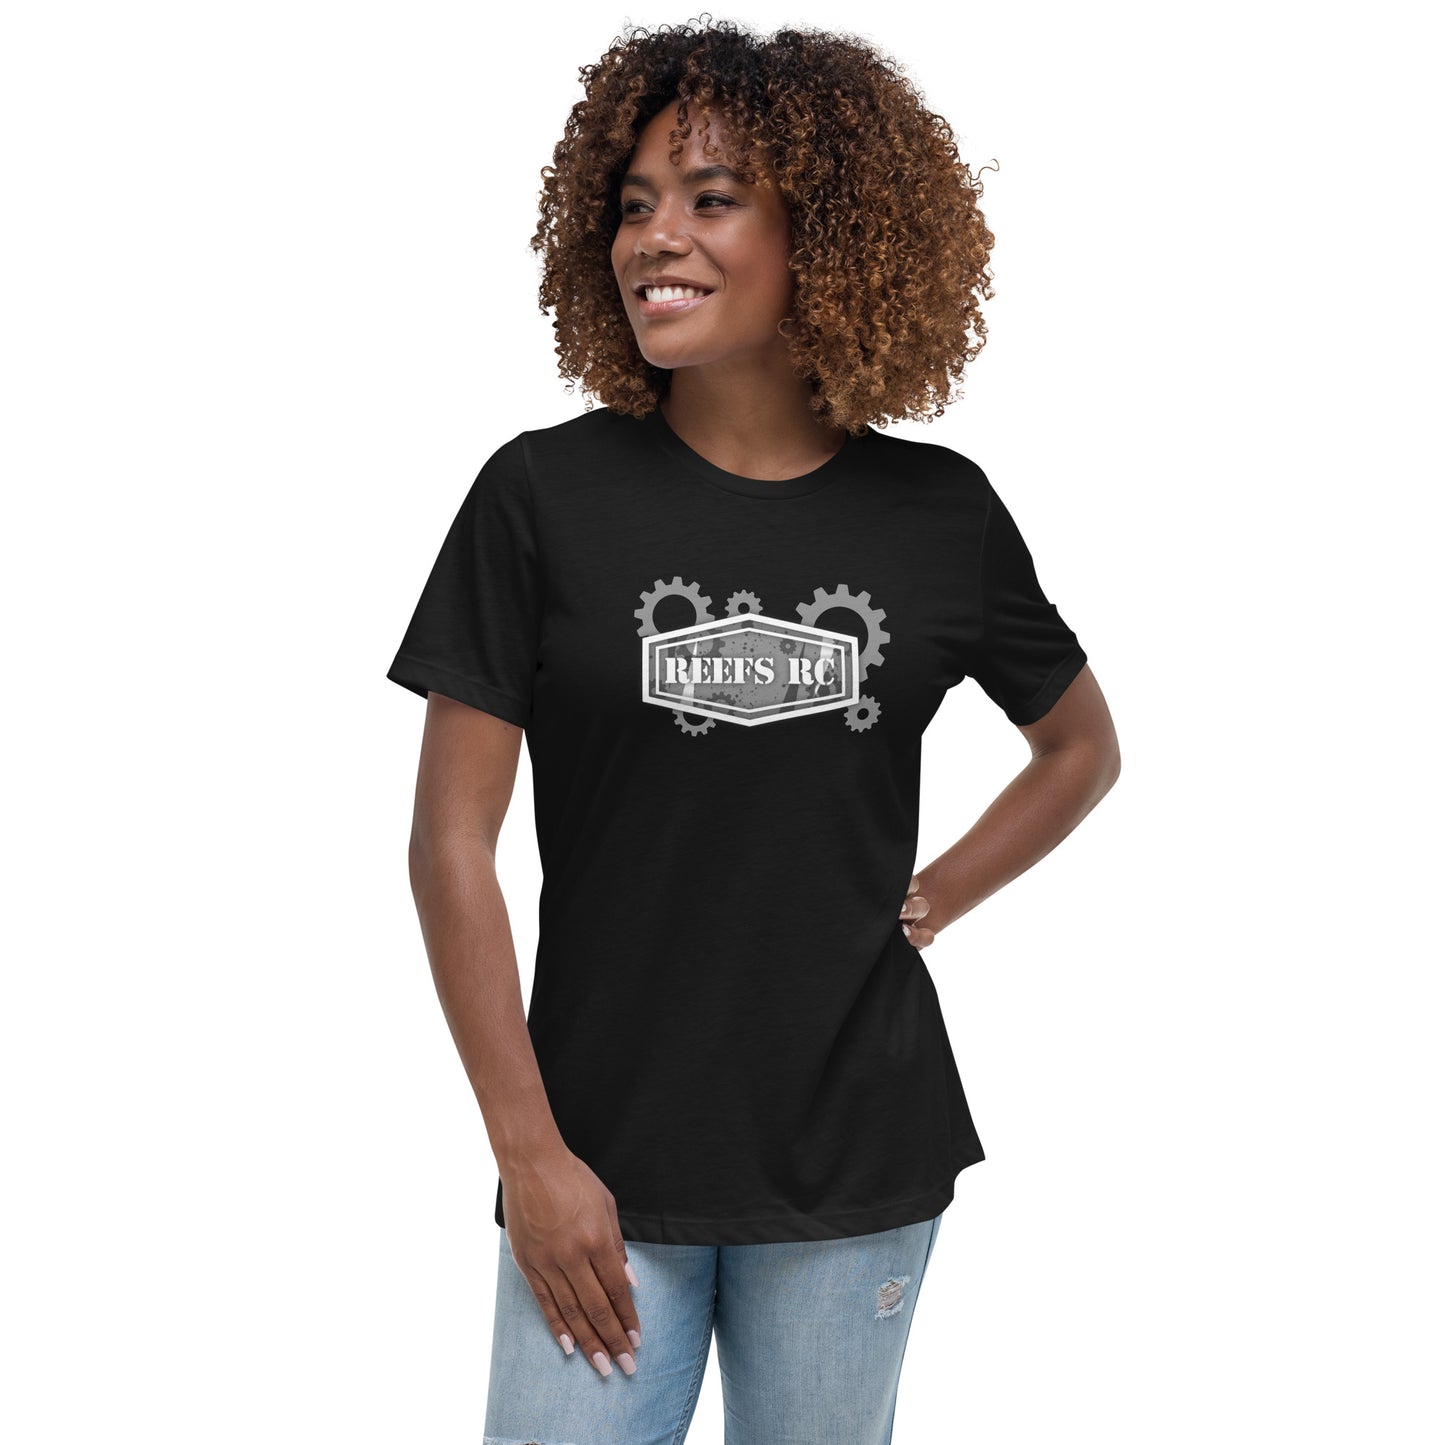 Reefs RC Gears Women's Relaxed T-Shirt (Bella+Canvas)